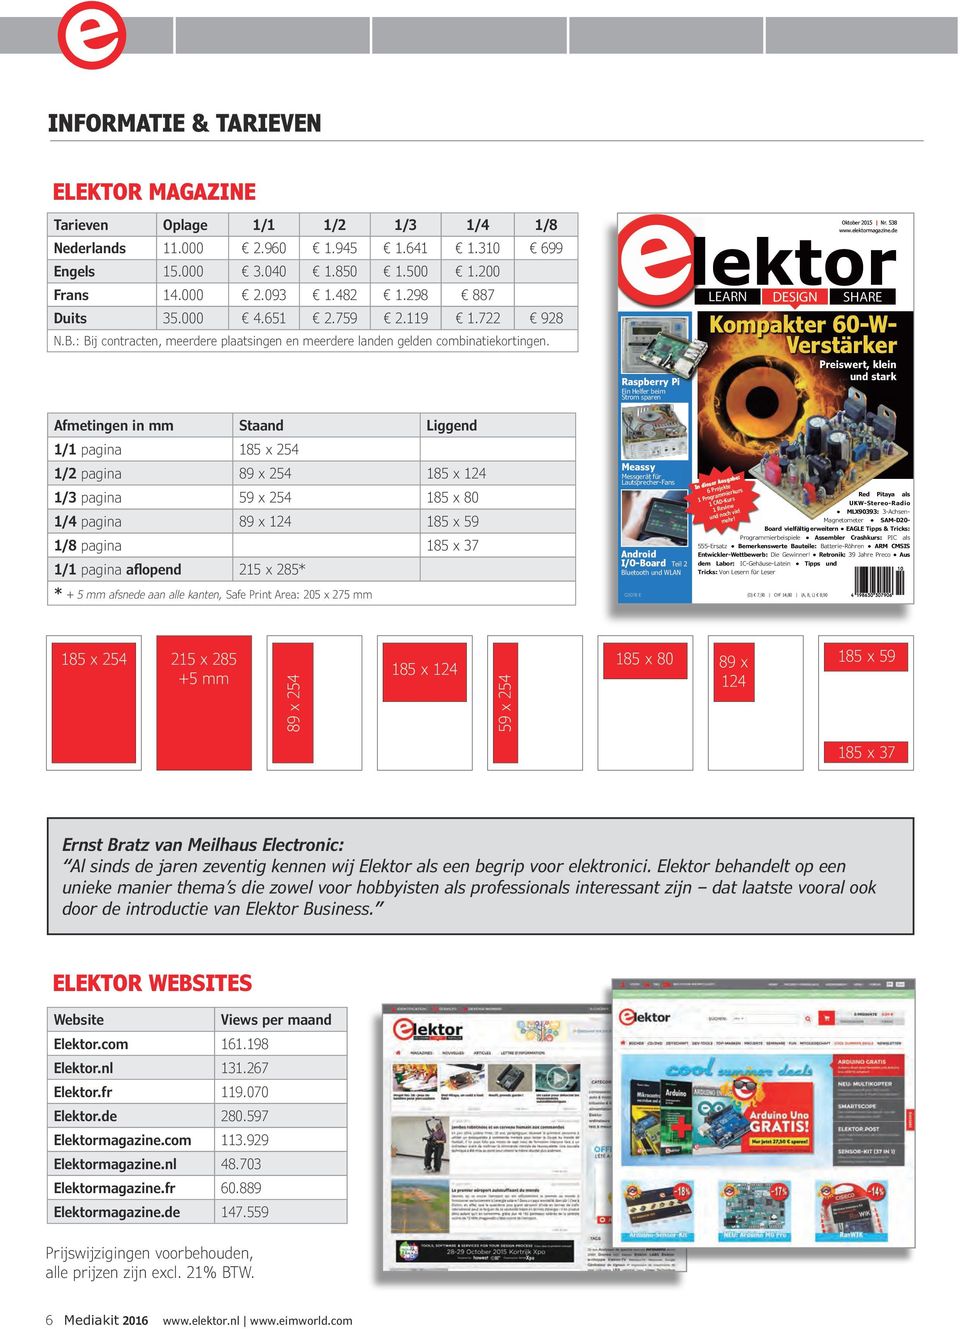 Raspberry Pi Ein Helfer beim Strom sparen LEARN DESIGN Oktober 2015 Nr. 538 www.elektormagazine.